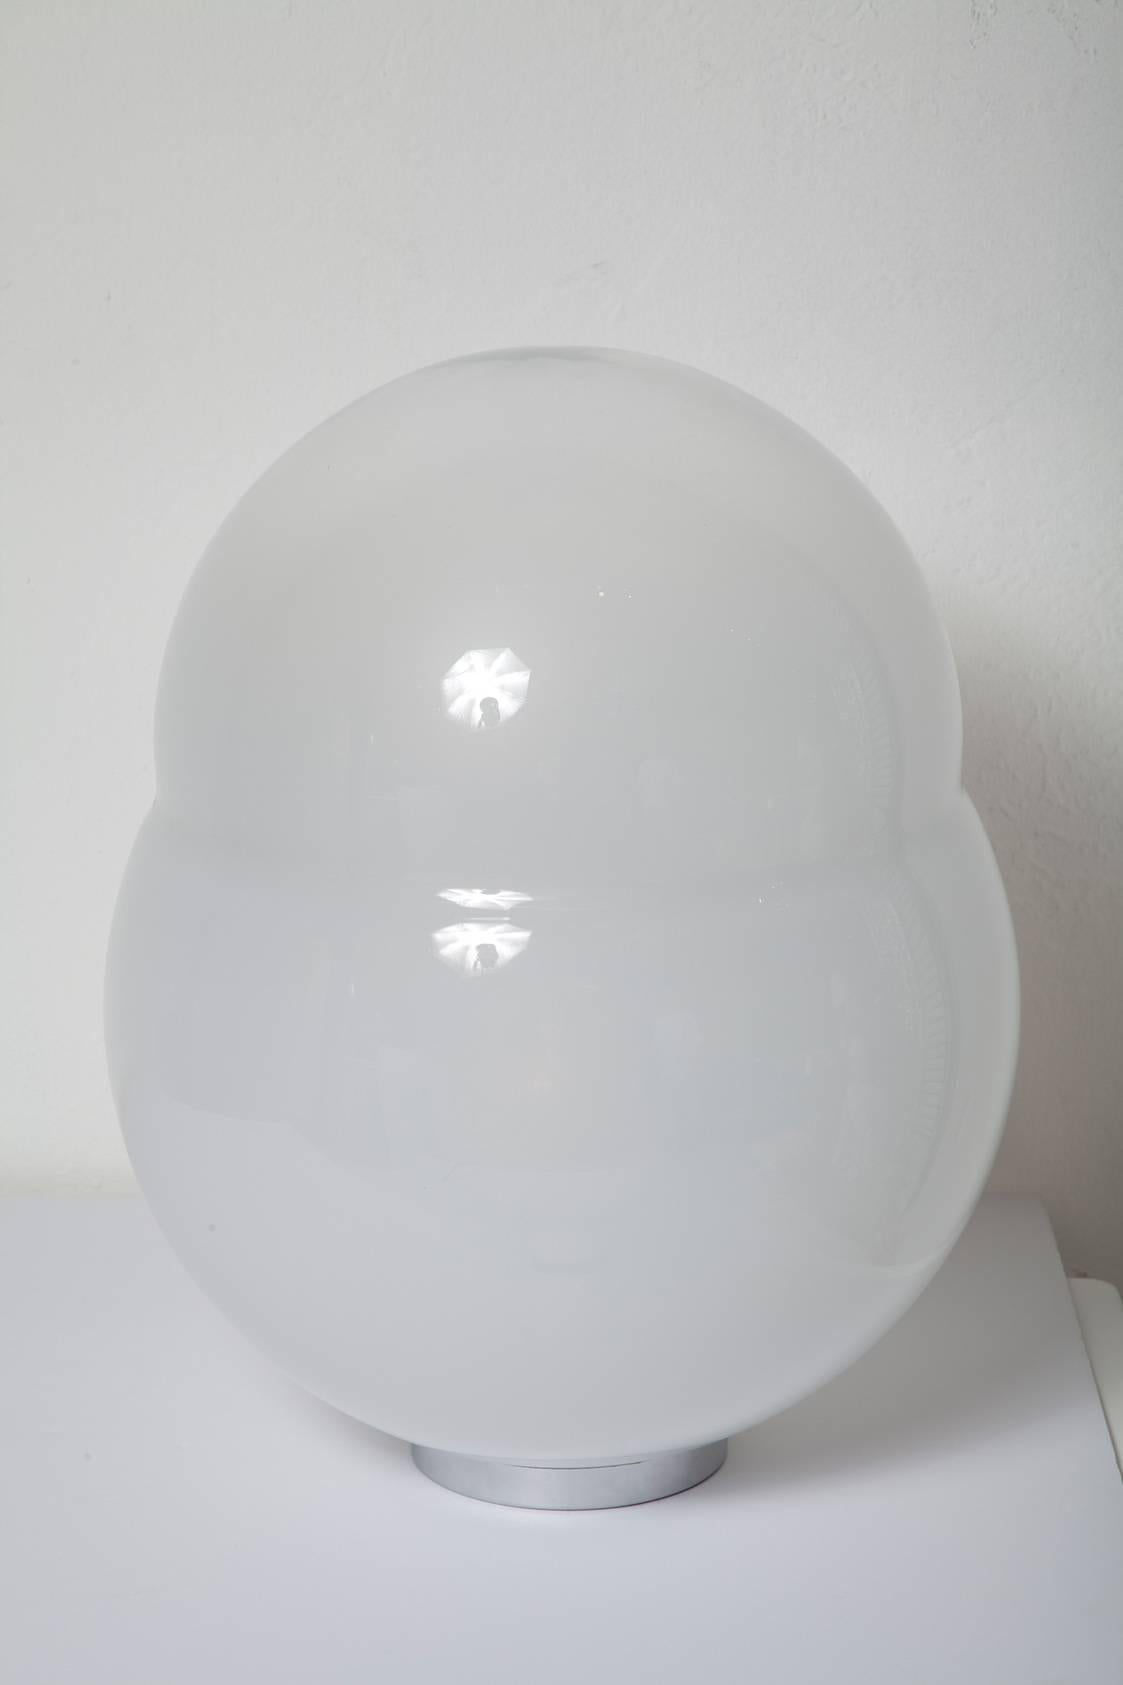 Large-scale, Alfredo Barbini double-bubble table lamp / light sculpture in hand-blown pale white sfumato glass on a chromed metal base, circa 1970. Barbini Murano label. U.S. wiring.